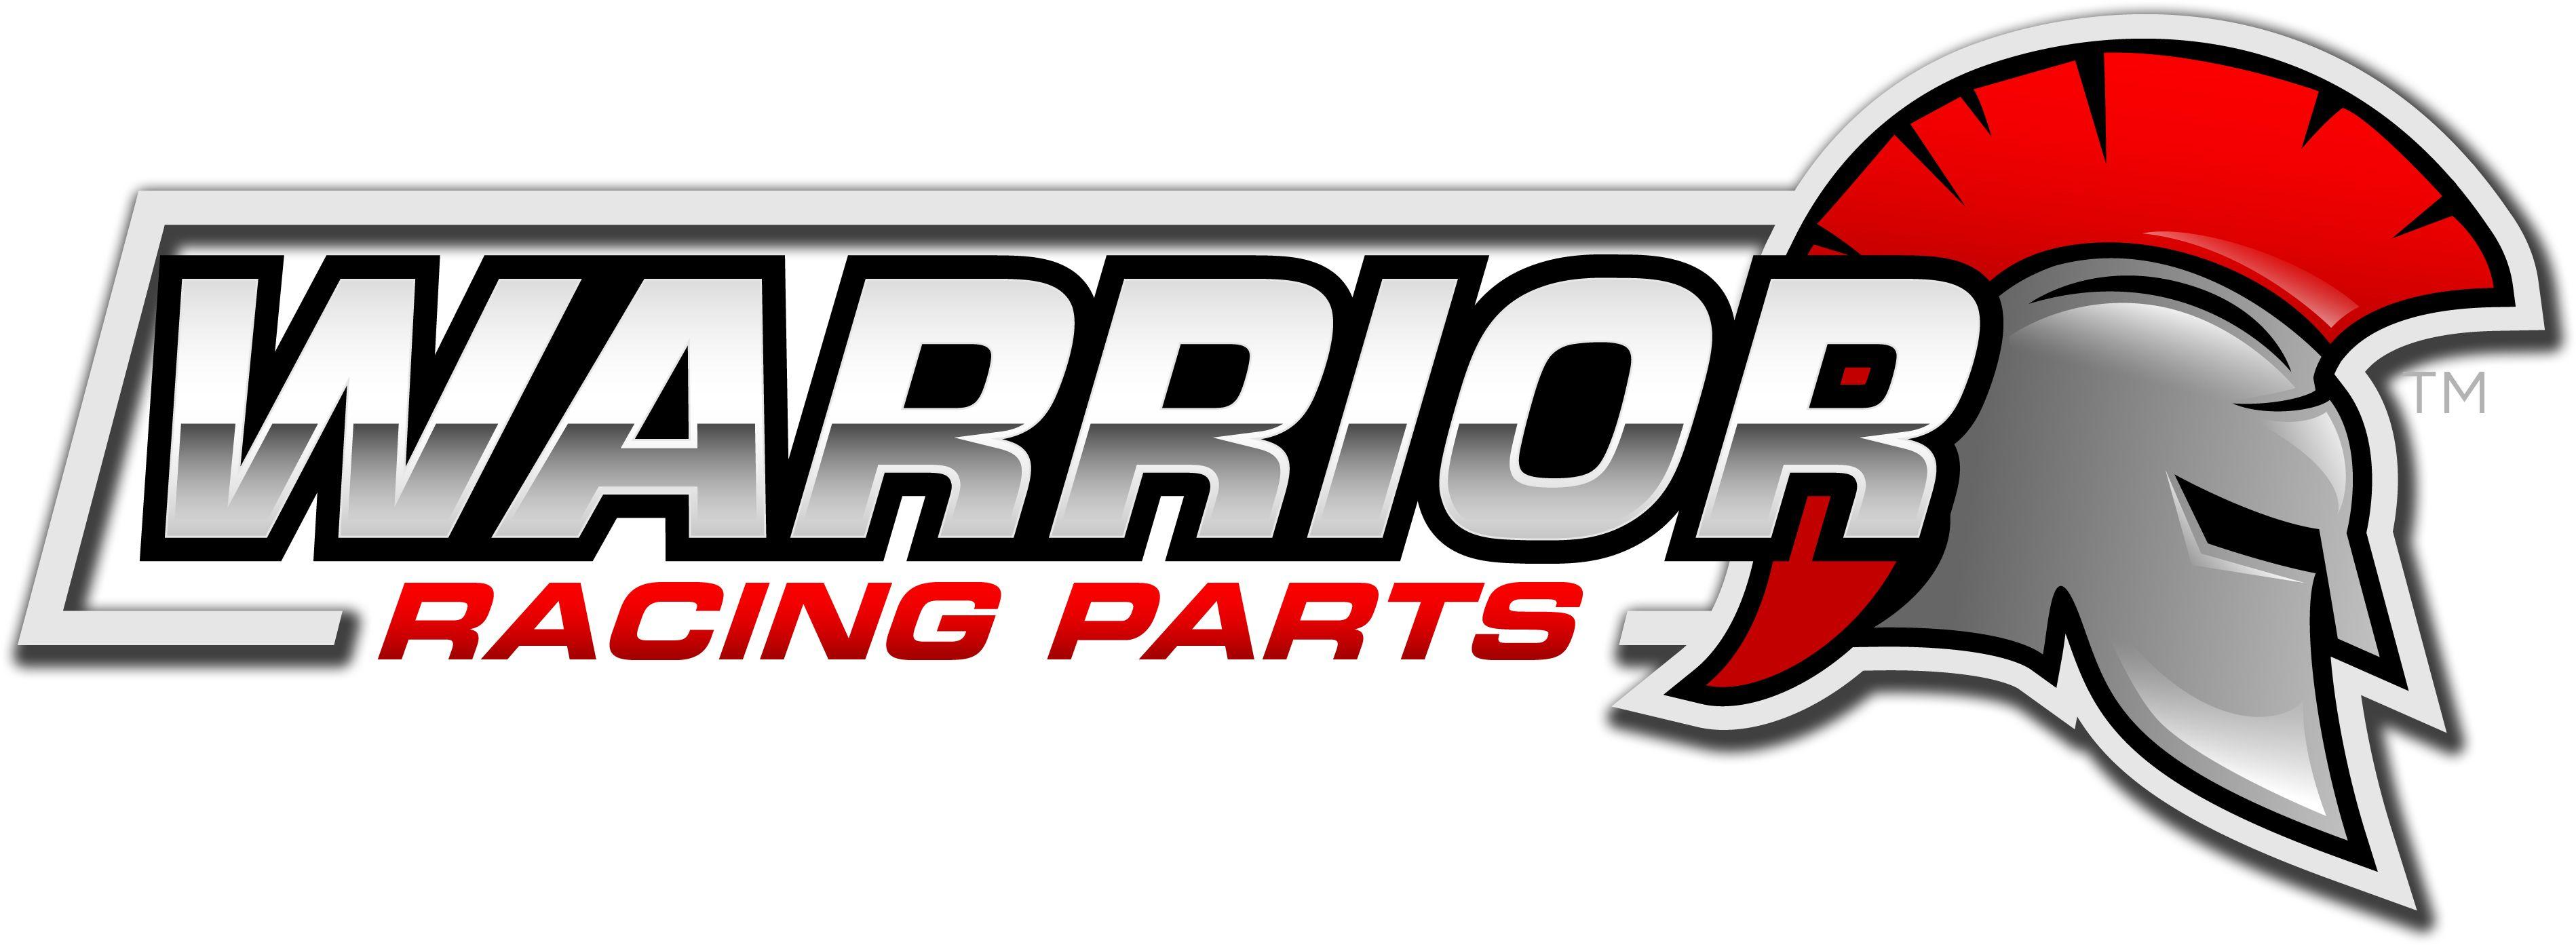 Racing Parts Logo - Warrior Racing Parts - Premium motorcycle racing parts